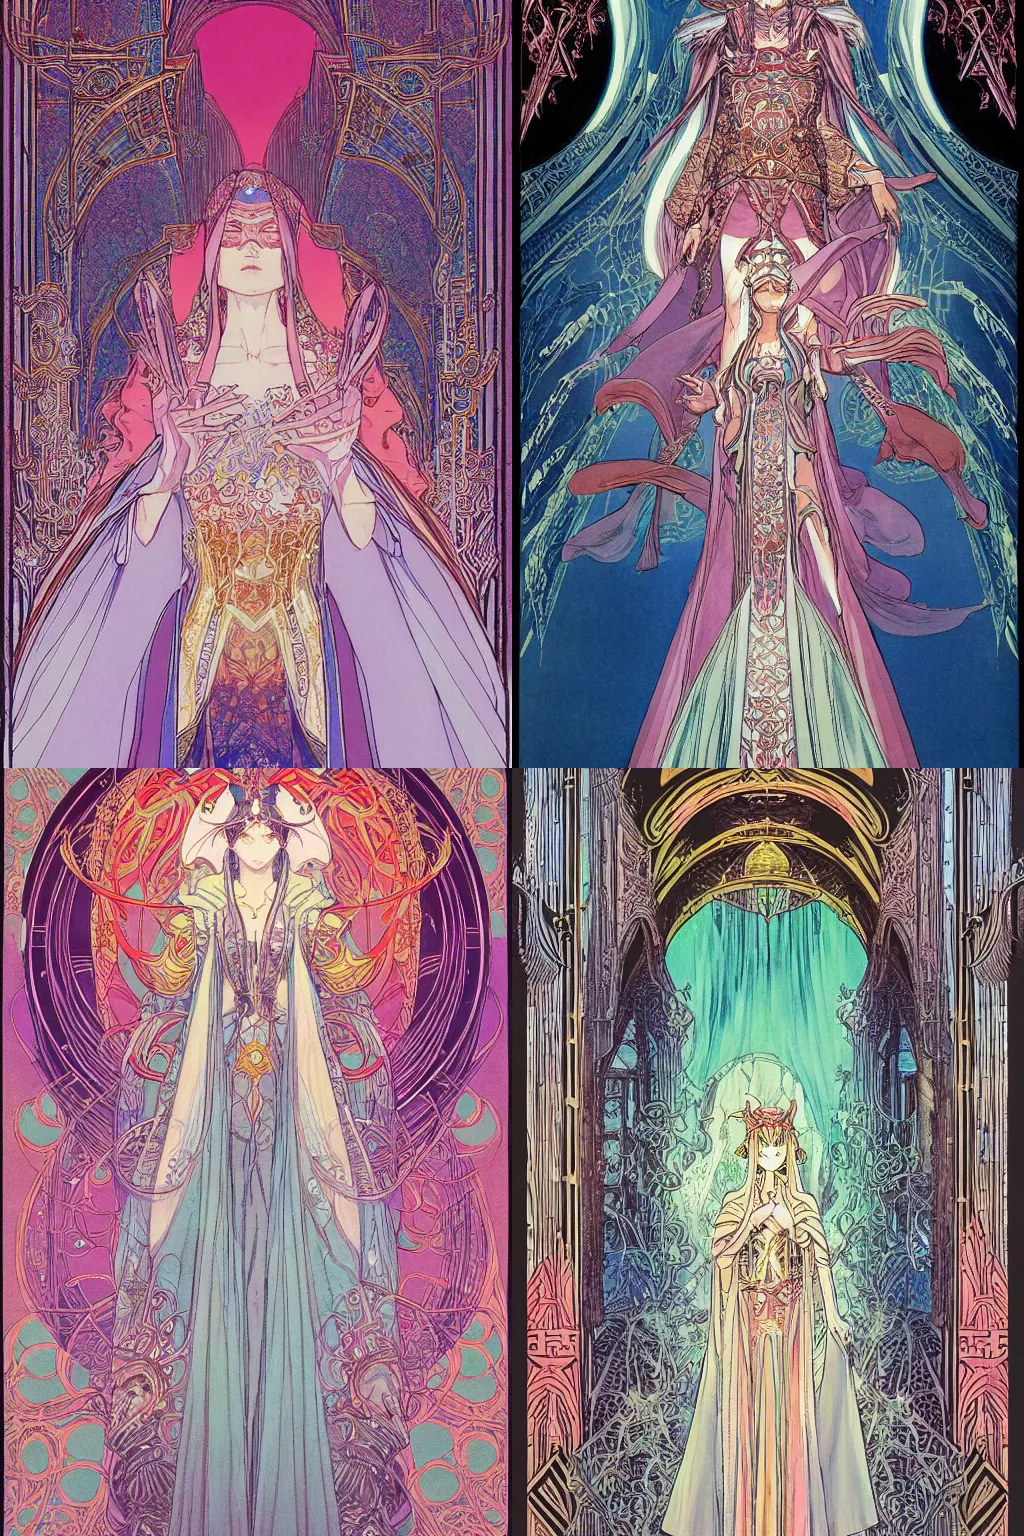 Prompt: wandering priestess in ornate art deco cape, fantasy book illustration by yoshitaka amano, moebius, bright pastel colors